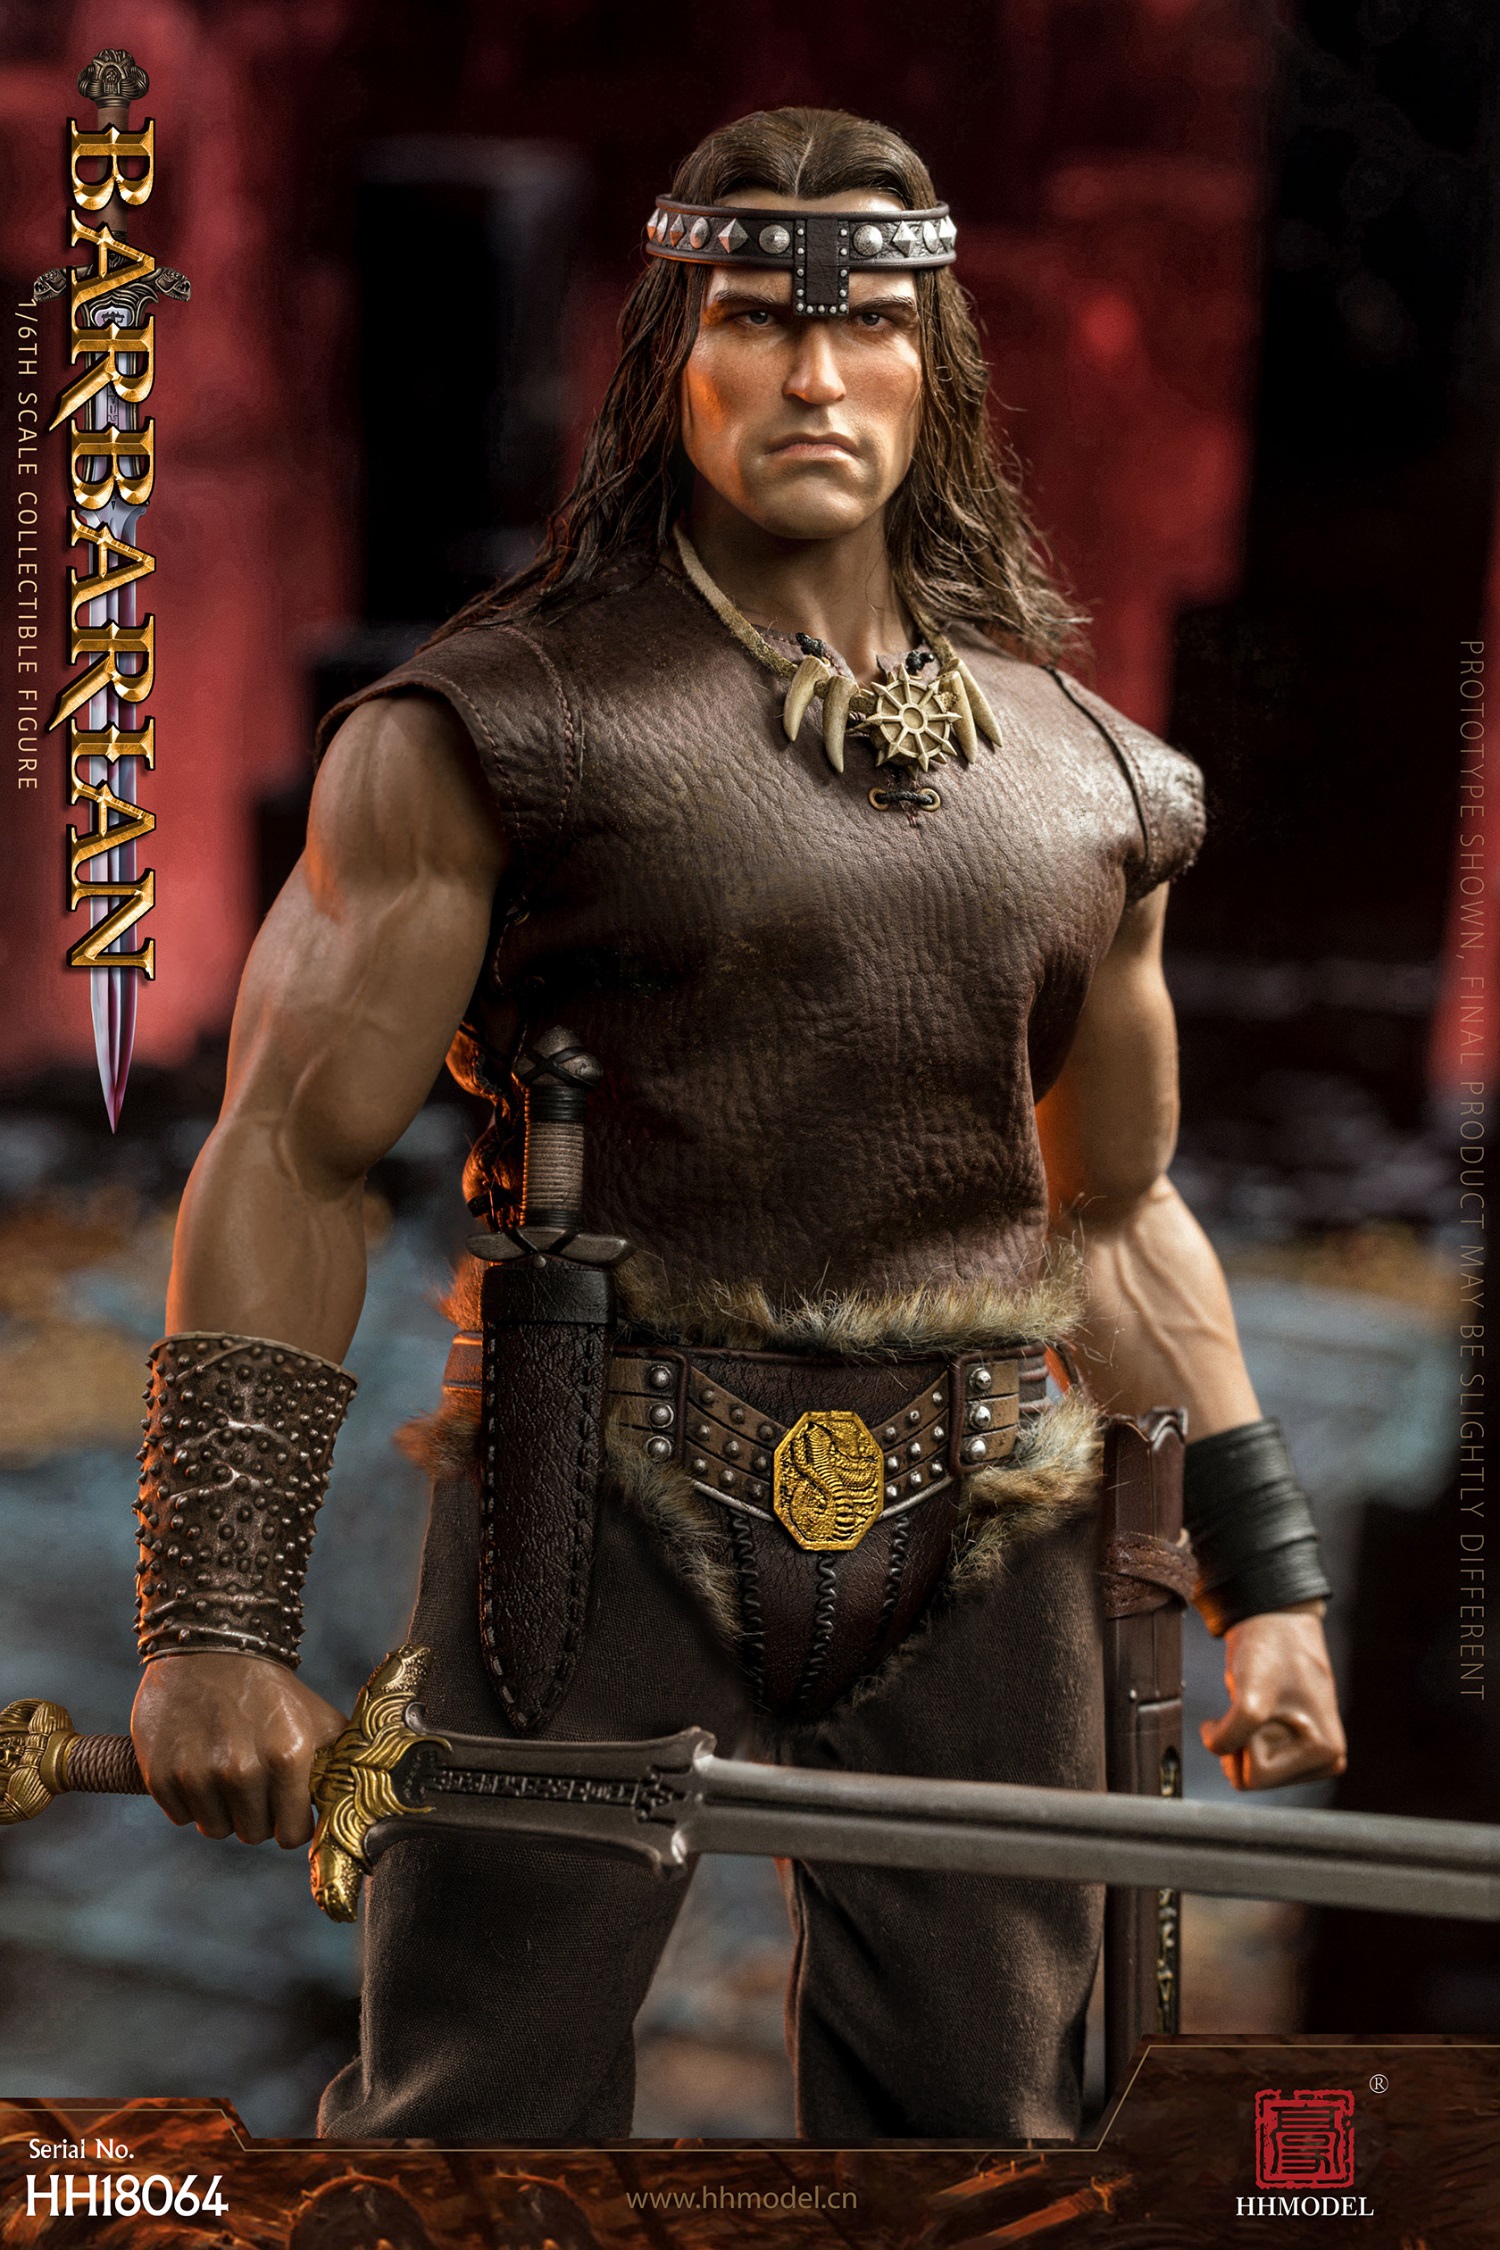 Conan the Barbarian - Imperial Legion